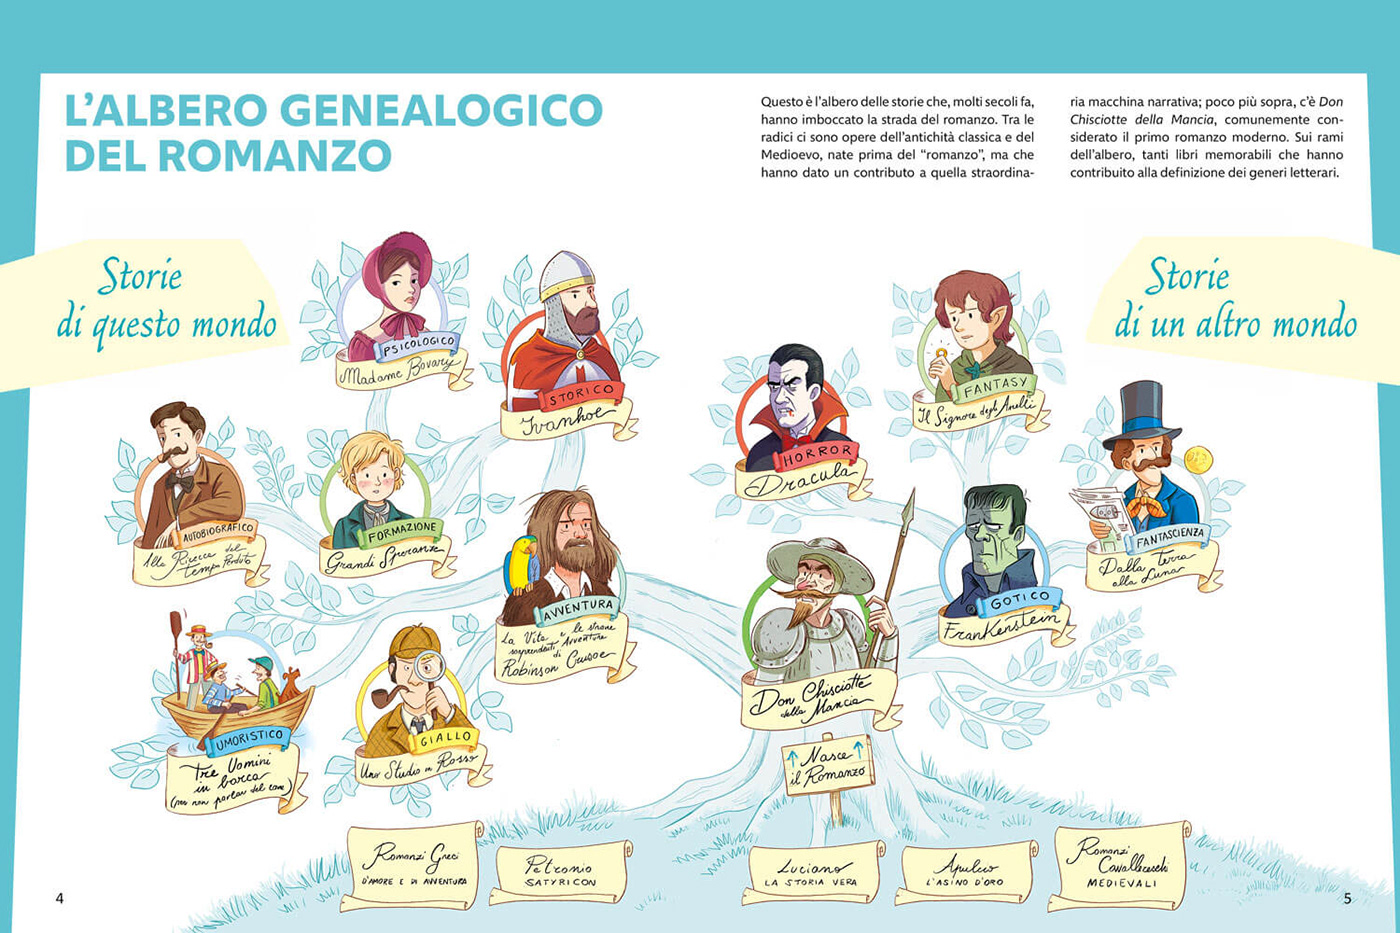 Albero genealogico book lover print children illustration fantasy genealogical tree illustrazione letteratura literary genres